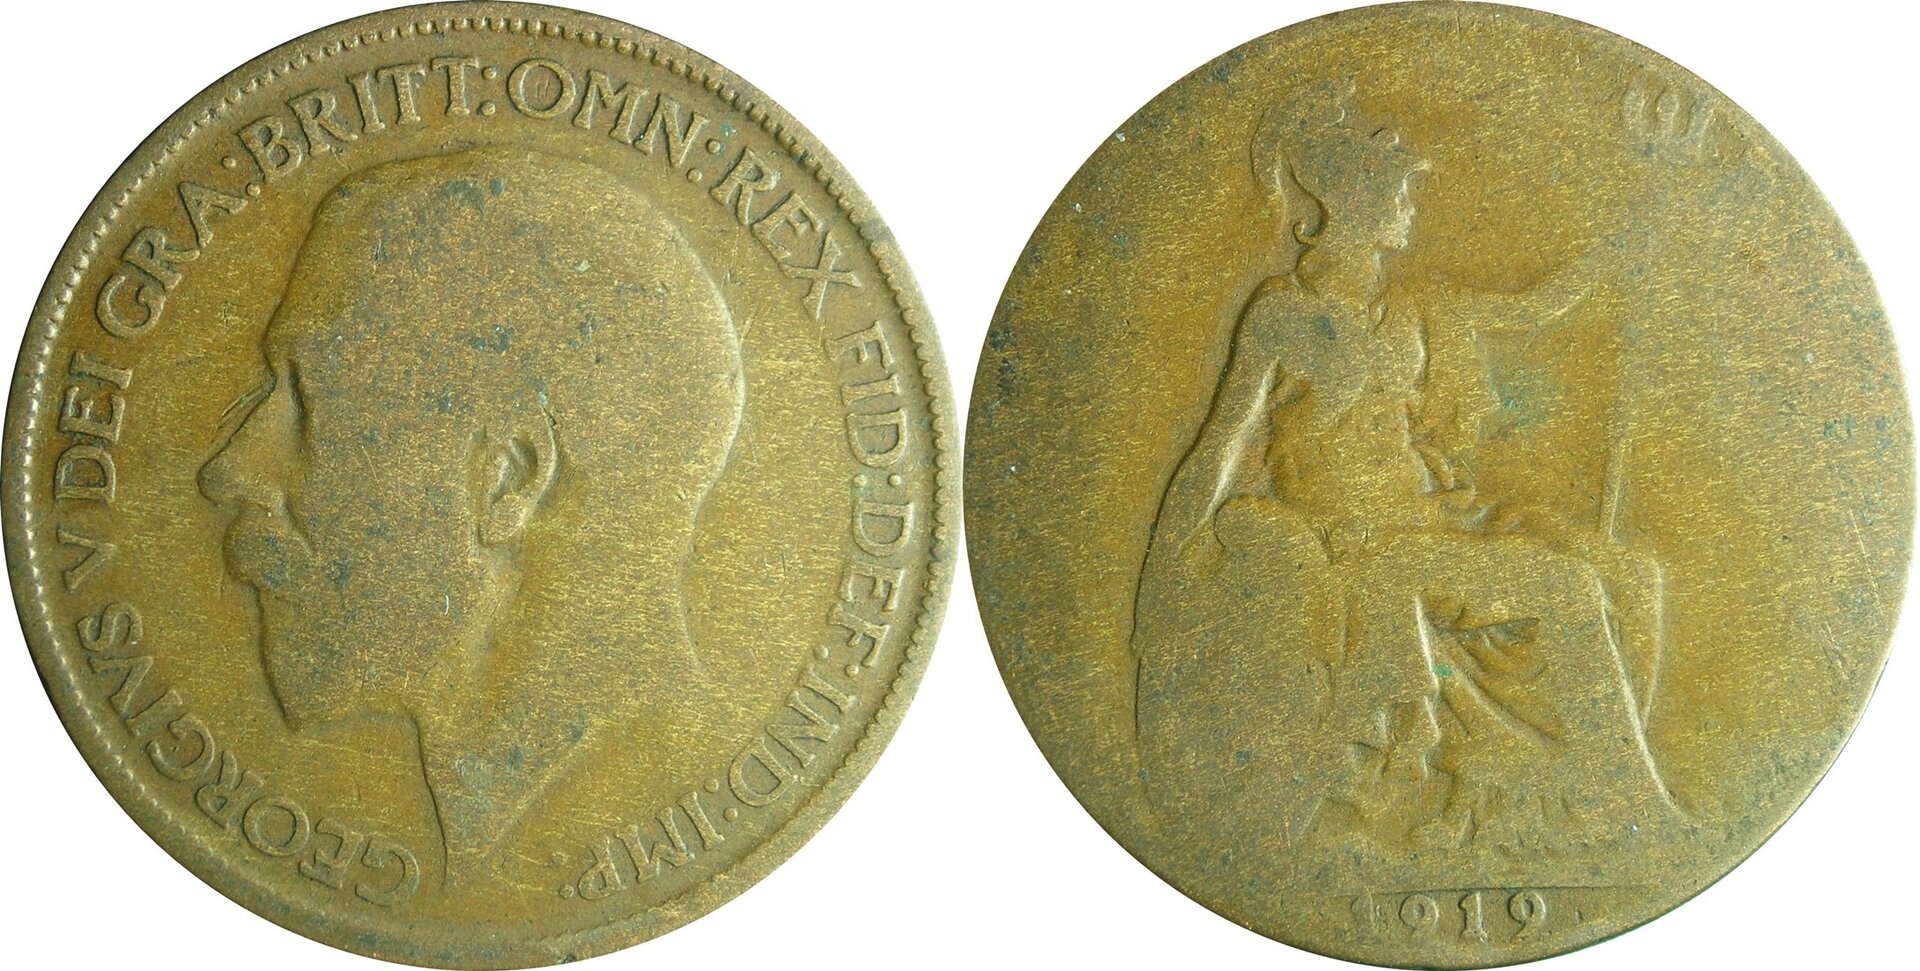 1919 GB 1-2 p.jpg